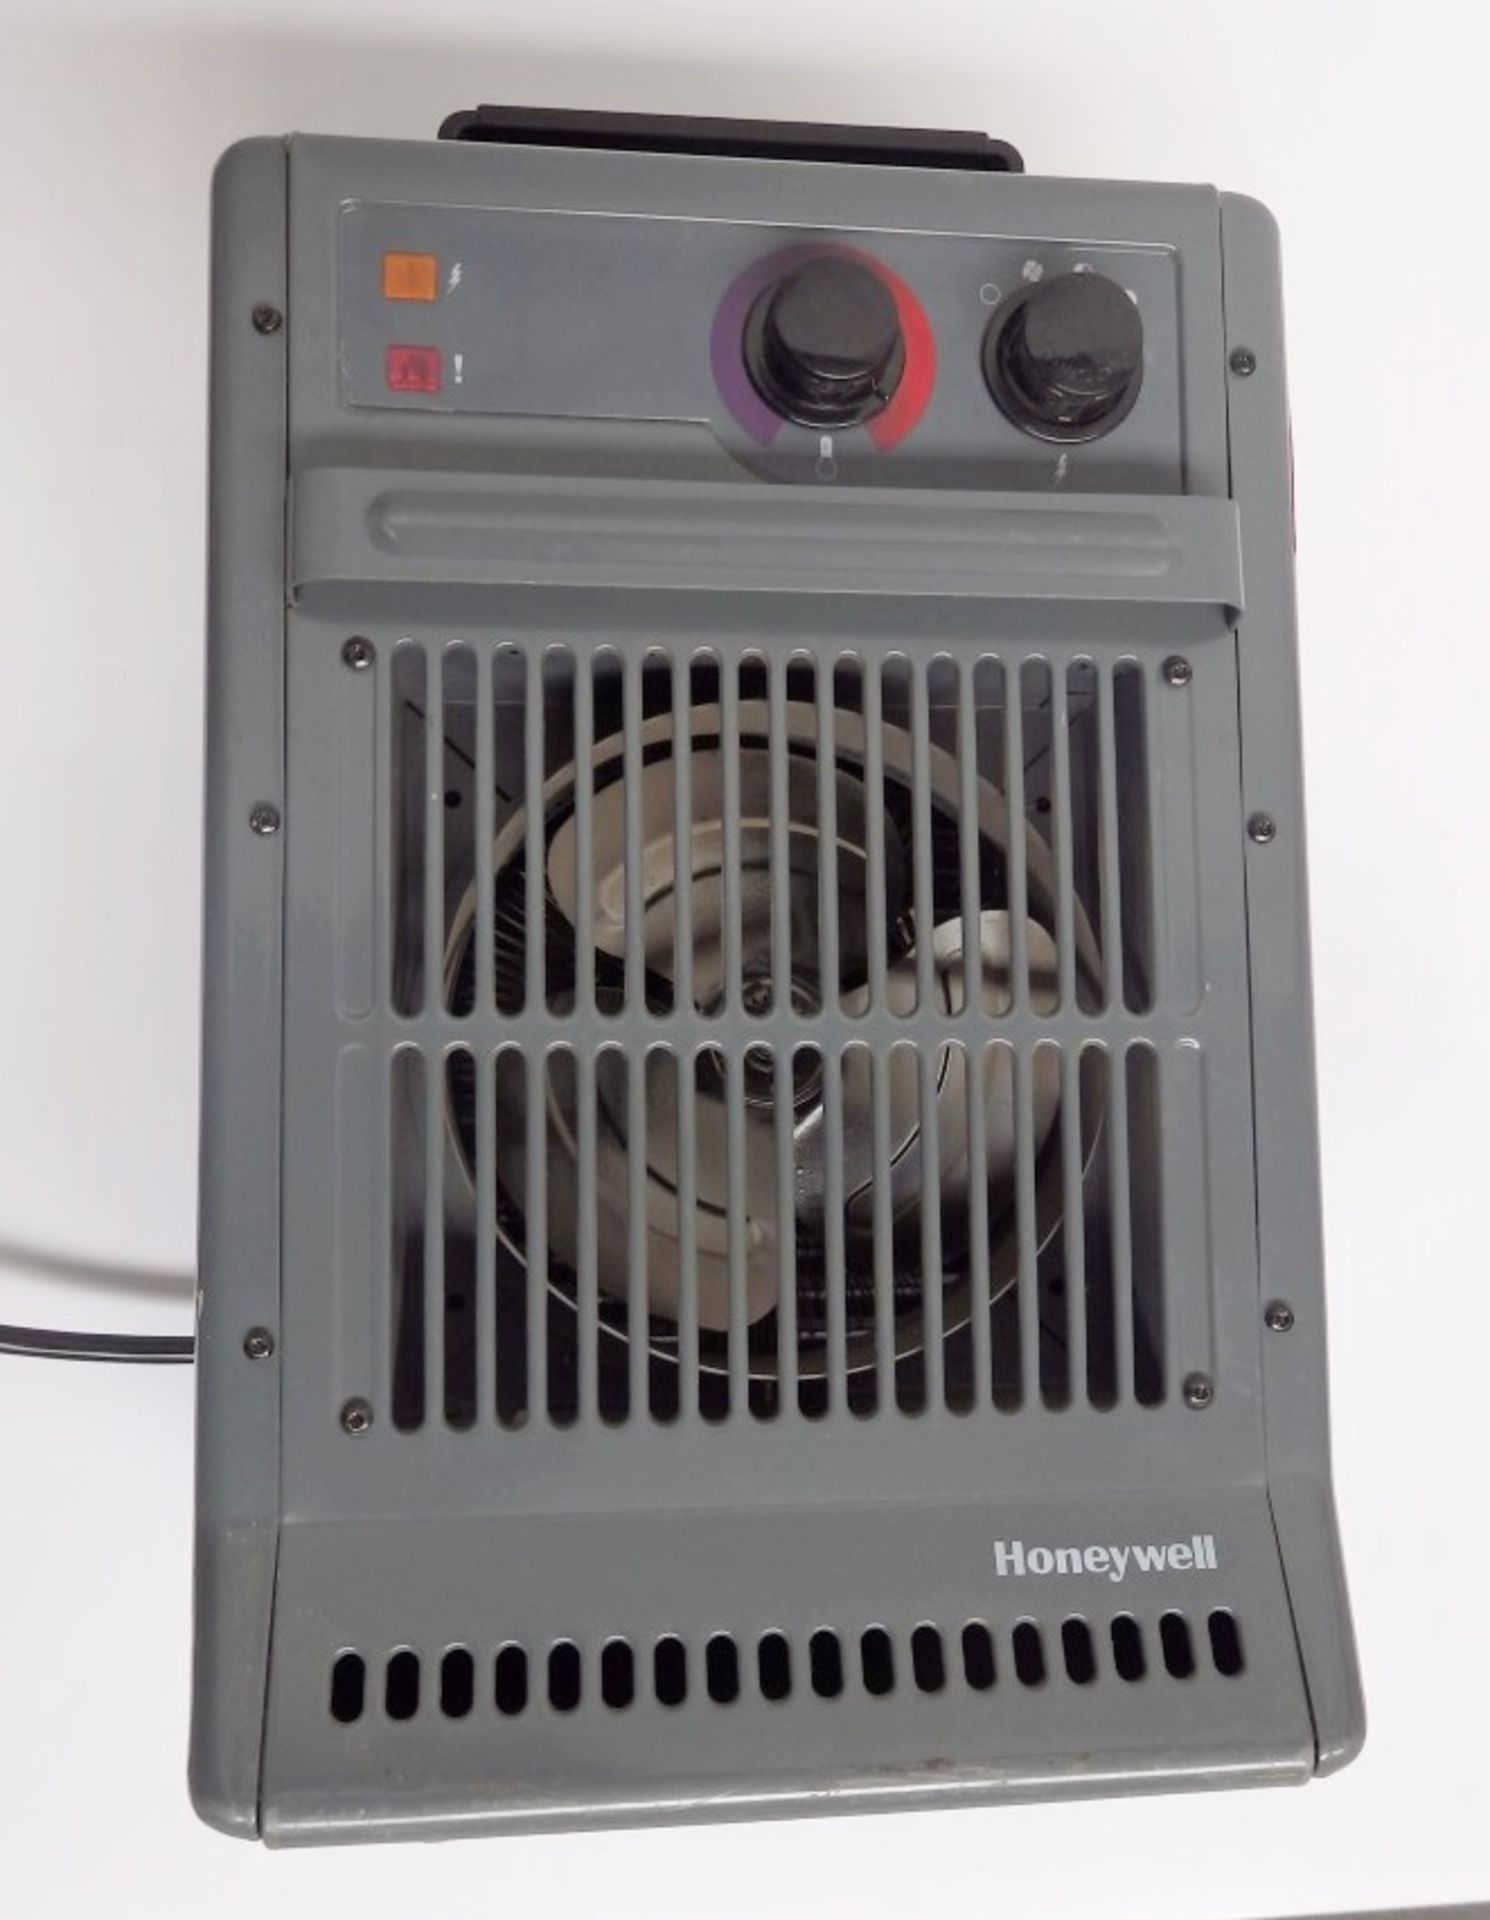 1 x Honeywell CZ-2104E Metal Fan Heater - Dimensions: 26 x 19 x 44 cm, Weight: 3.9 Kg - Recently